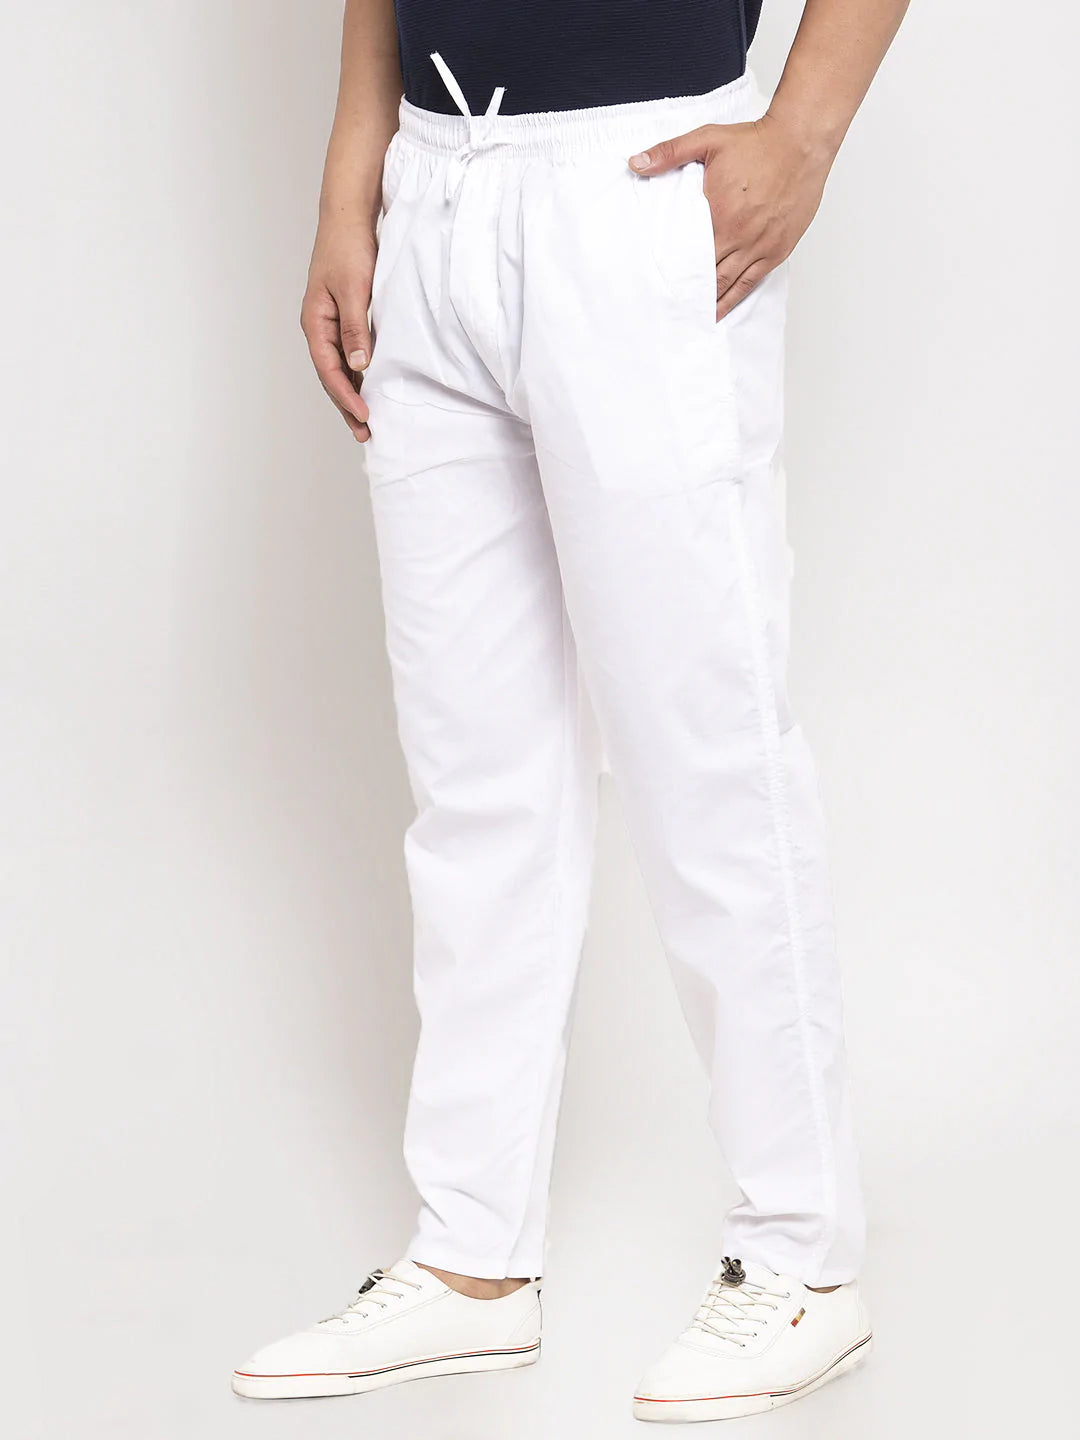 Jainish Men's White Solid Cotton Track Pants ( JOG 011White )